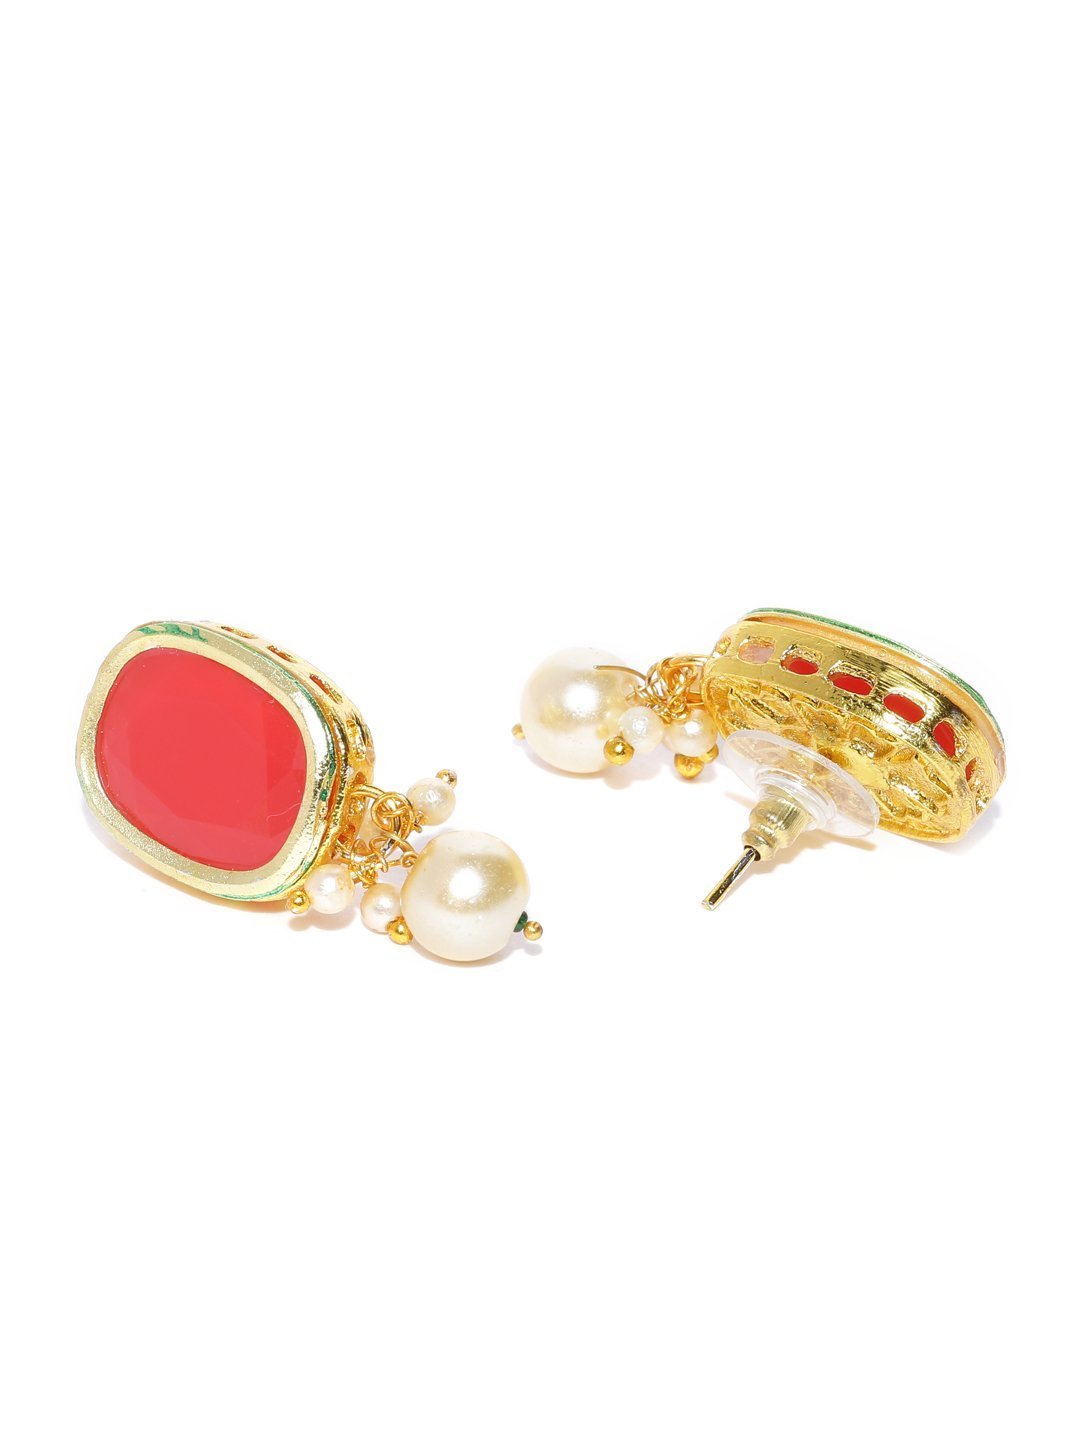 Women's Multi-Color Stones Pearls Kundan Gold Plated Jewellery Set - Priyaasi